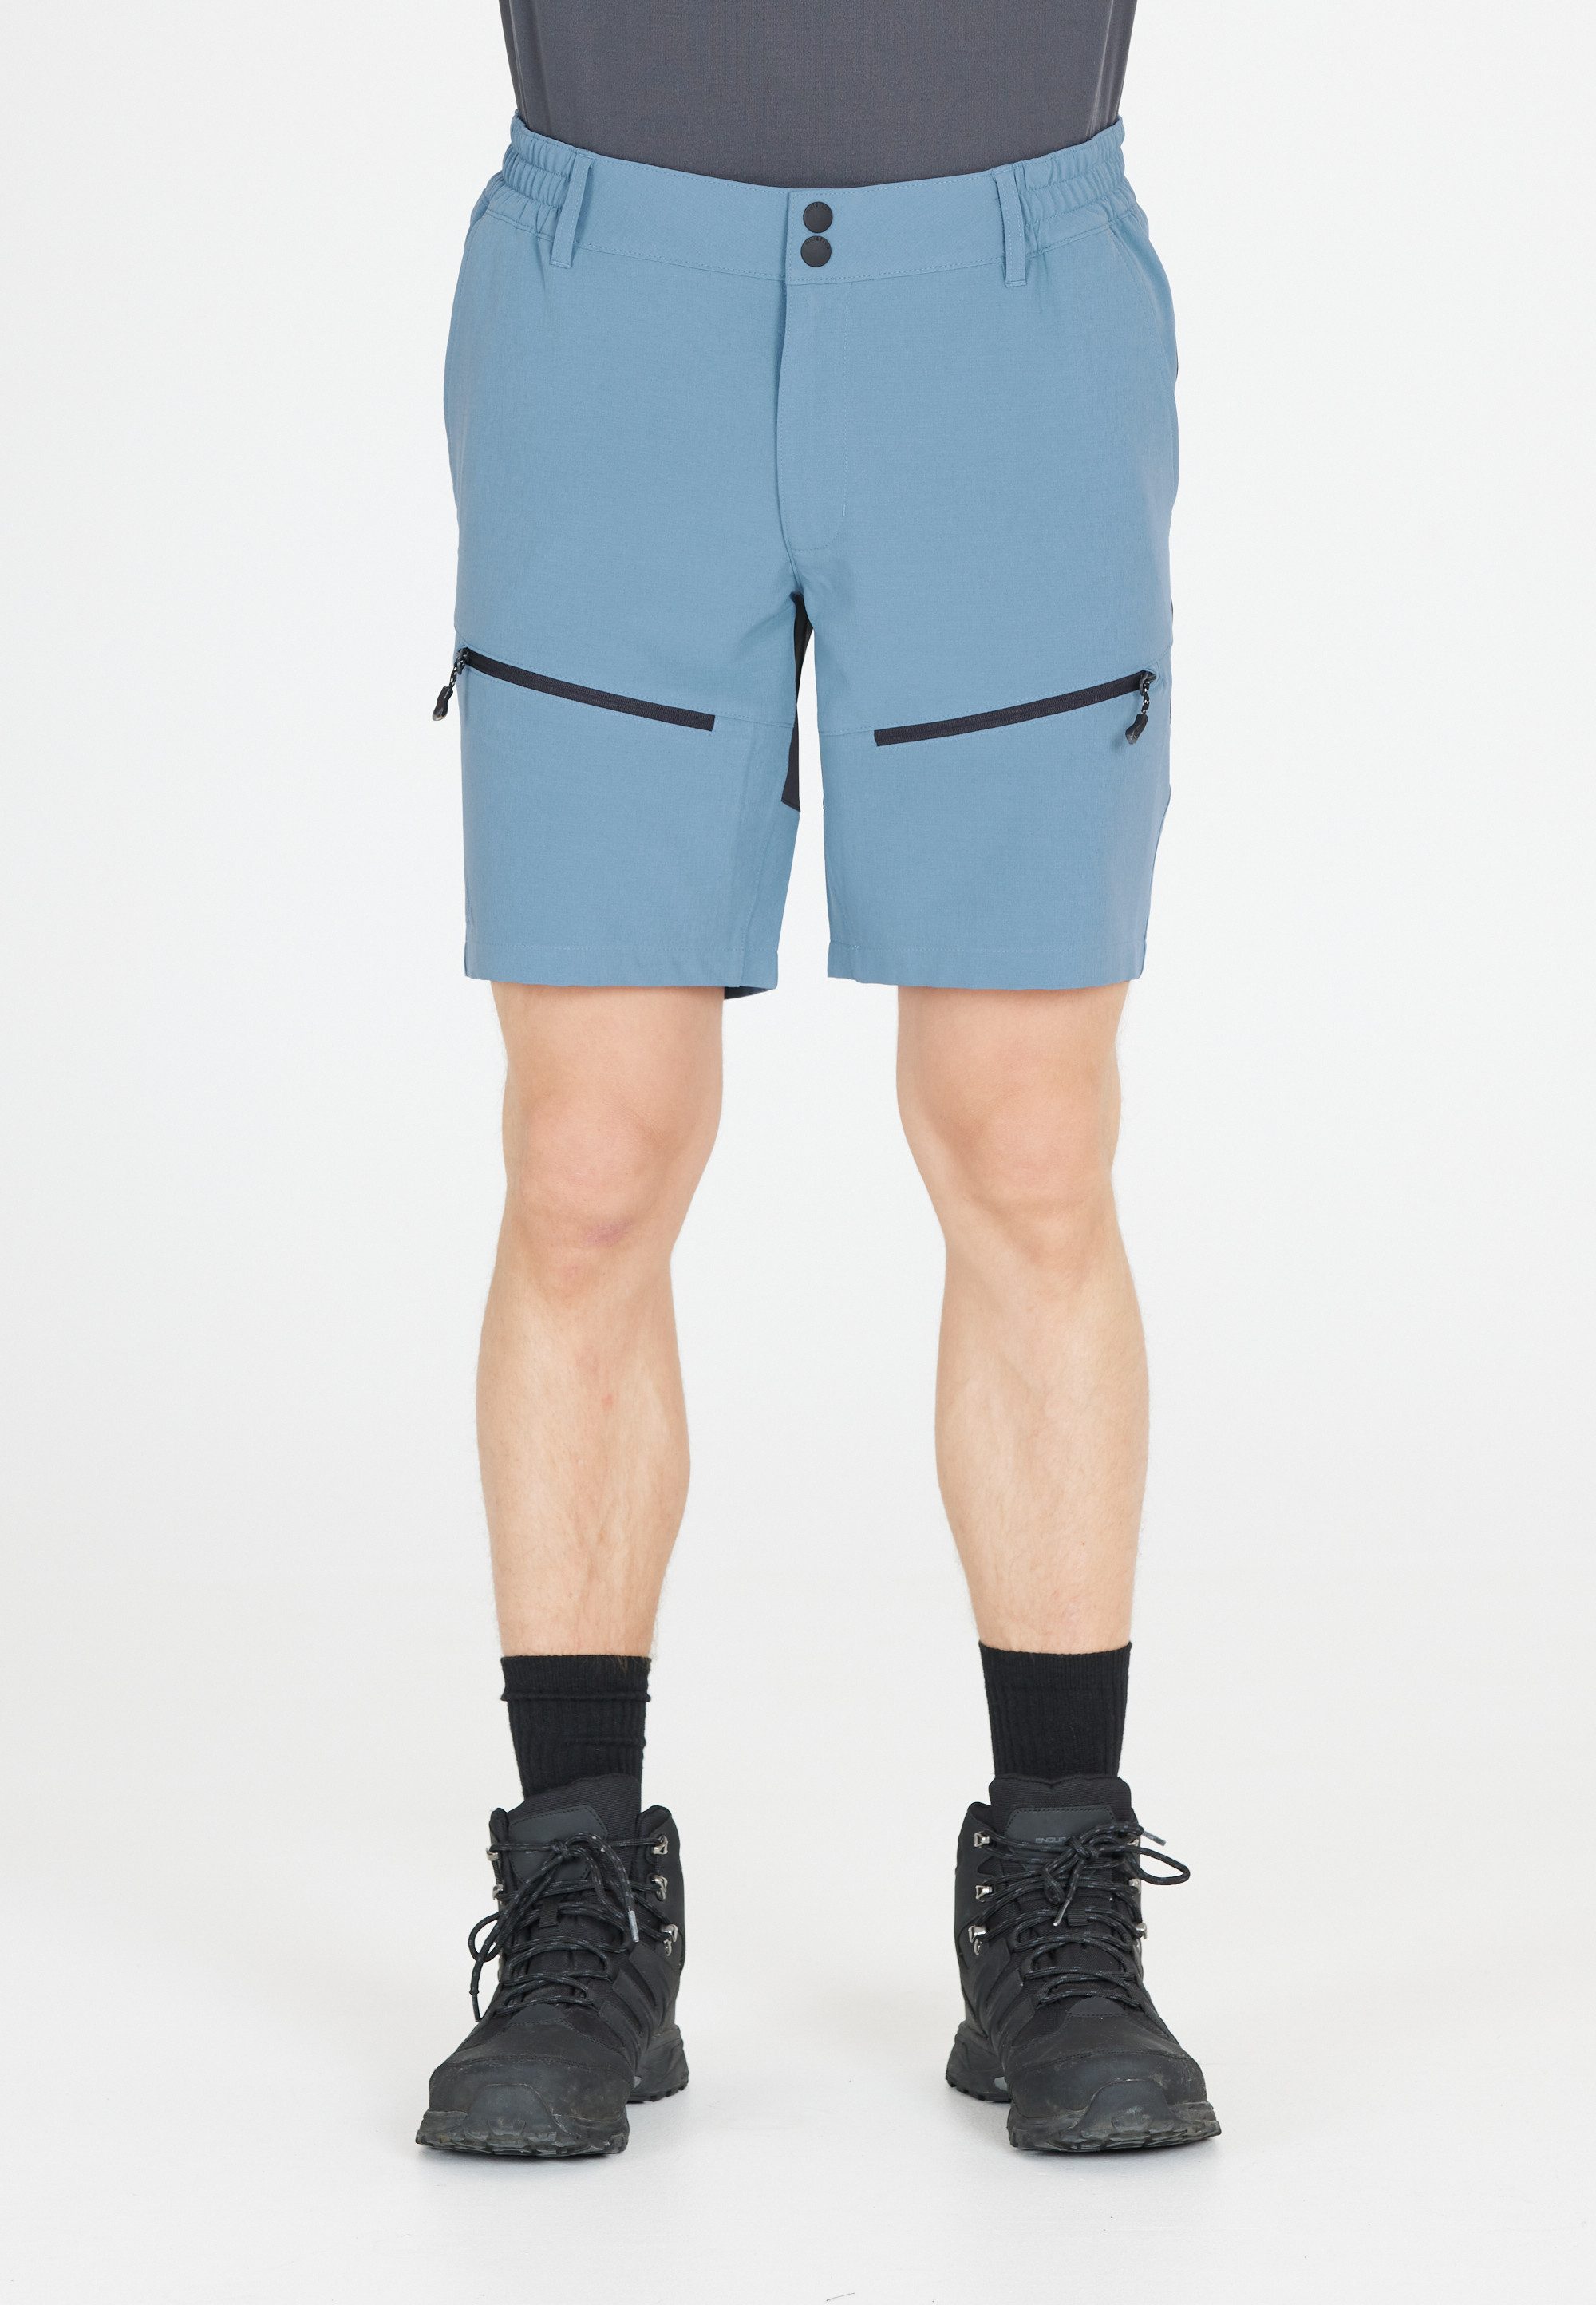 WHISTLER Shorts mit 4-Wege-Stretch-Material